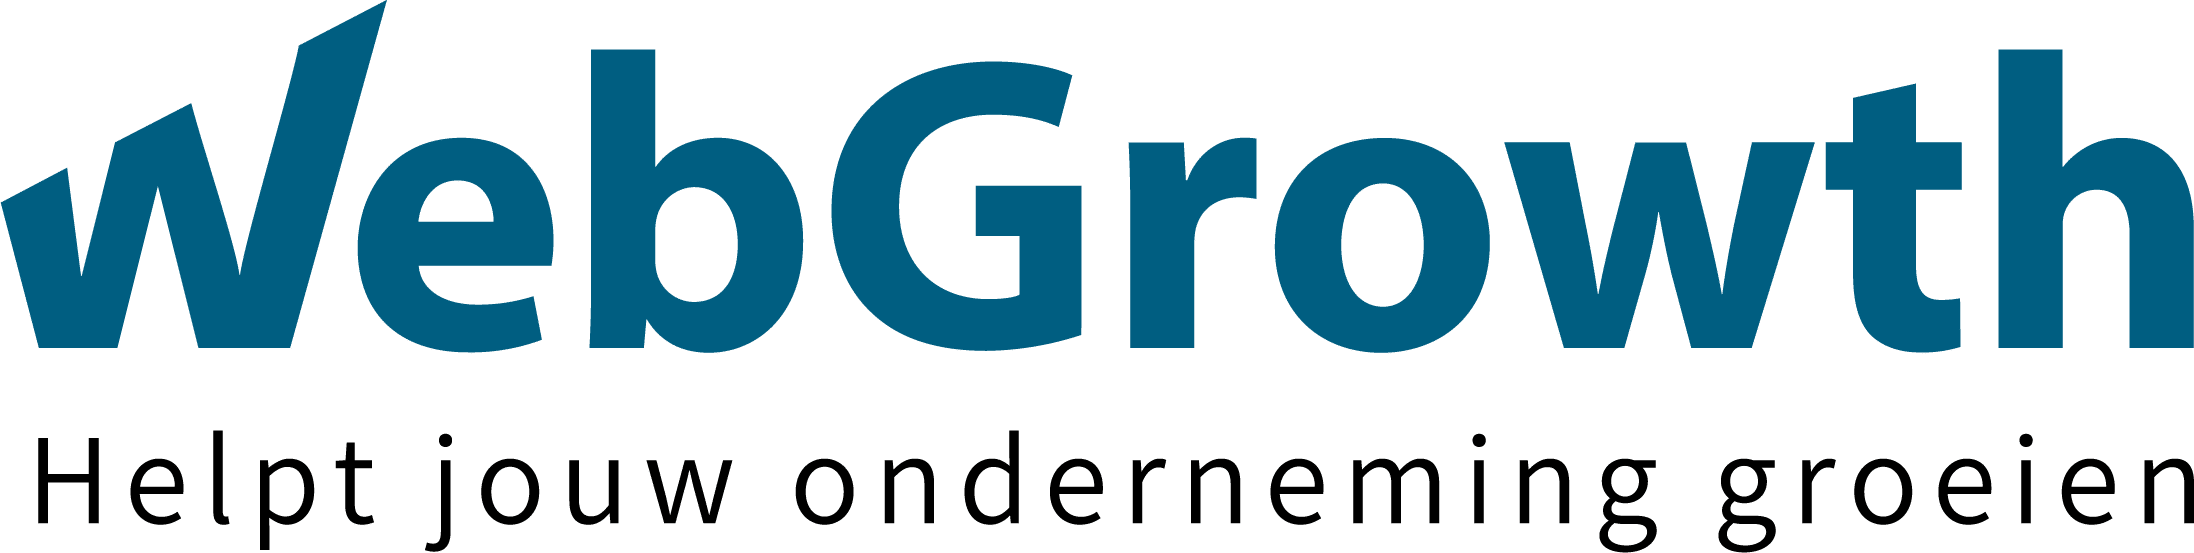 WebGrowth-logotyp